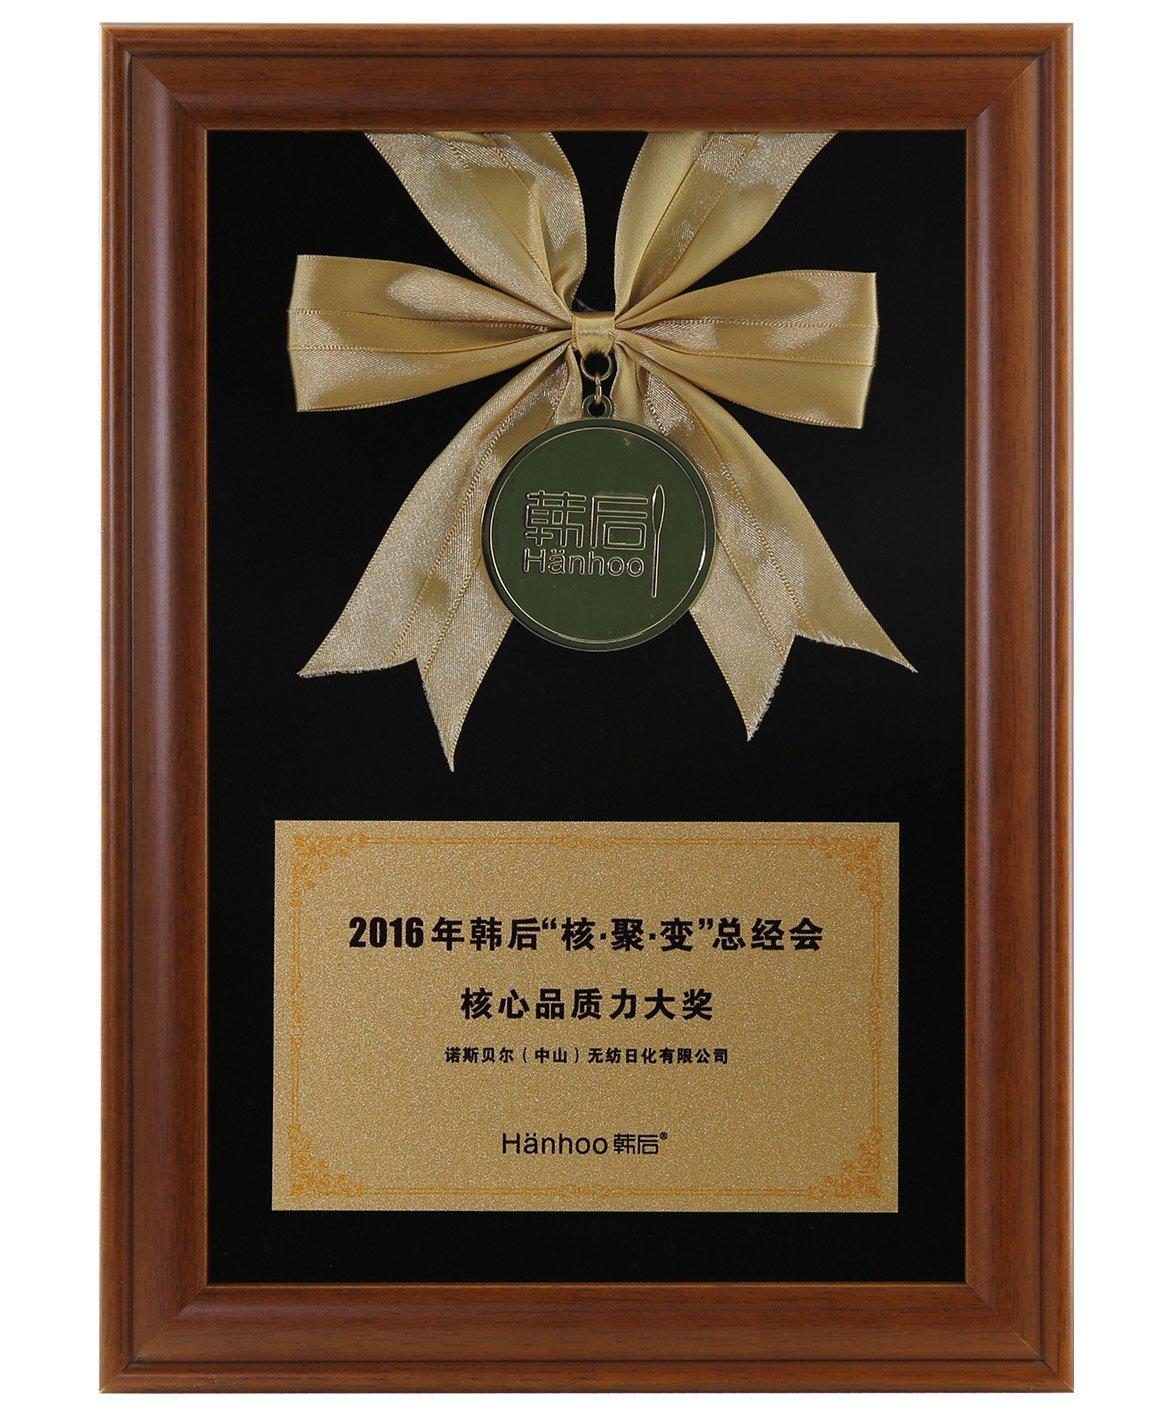 Hanhoo’s Core Quality Award 2016